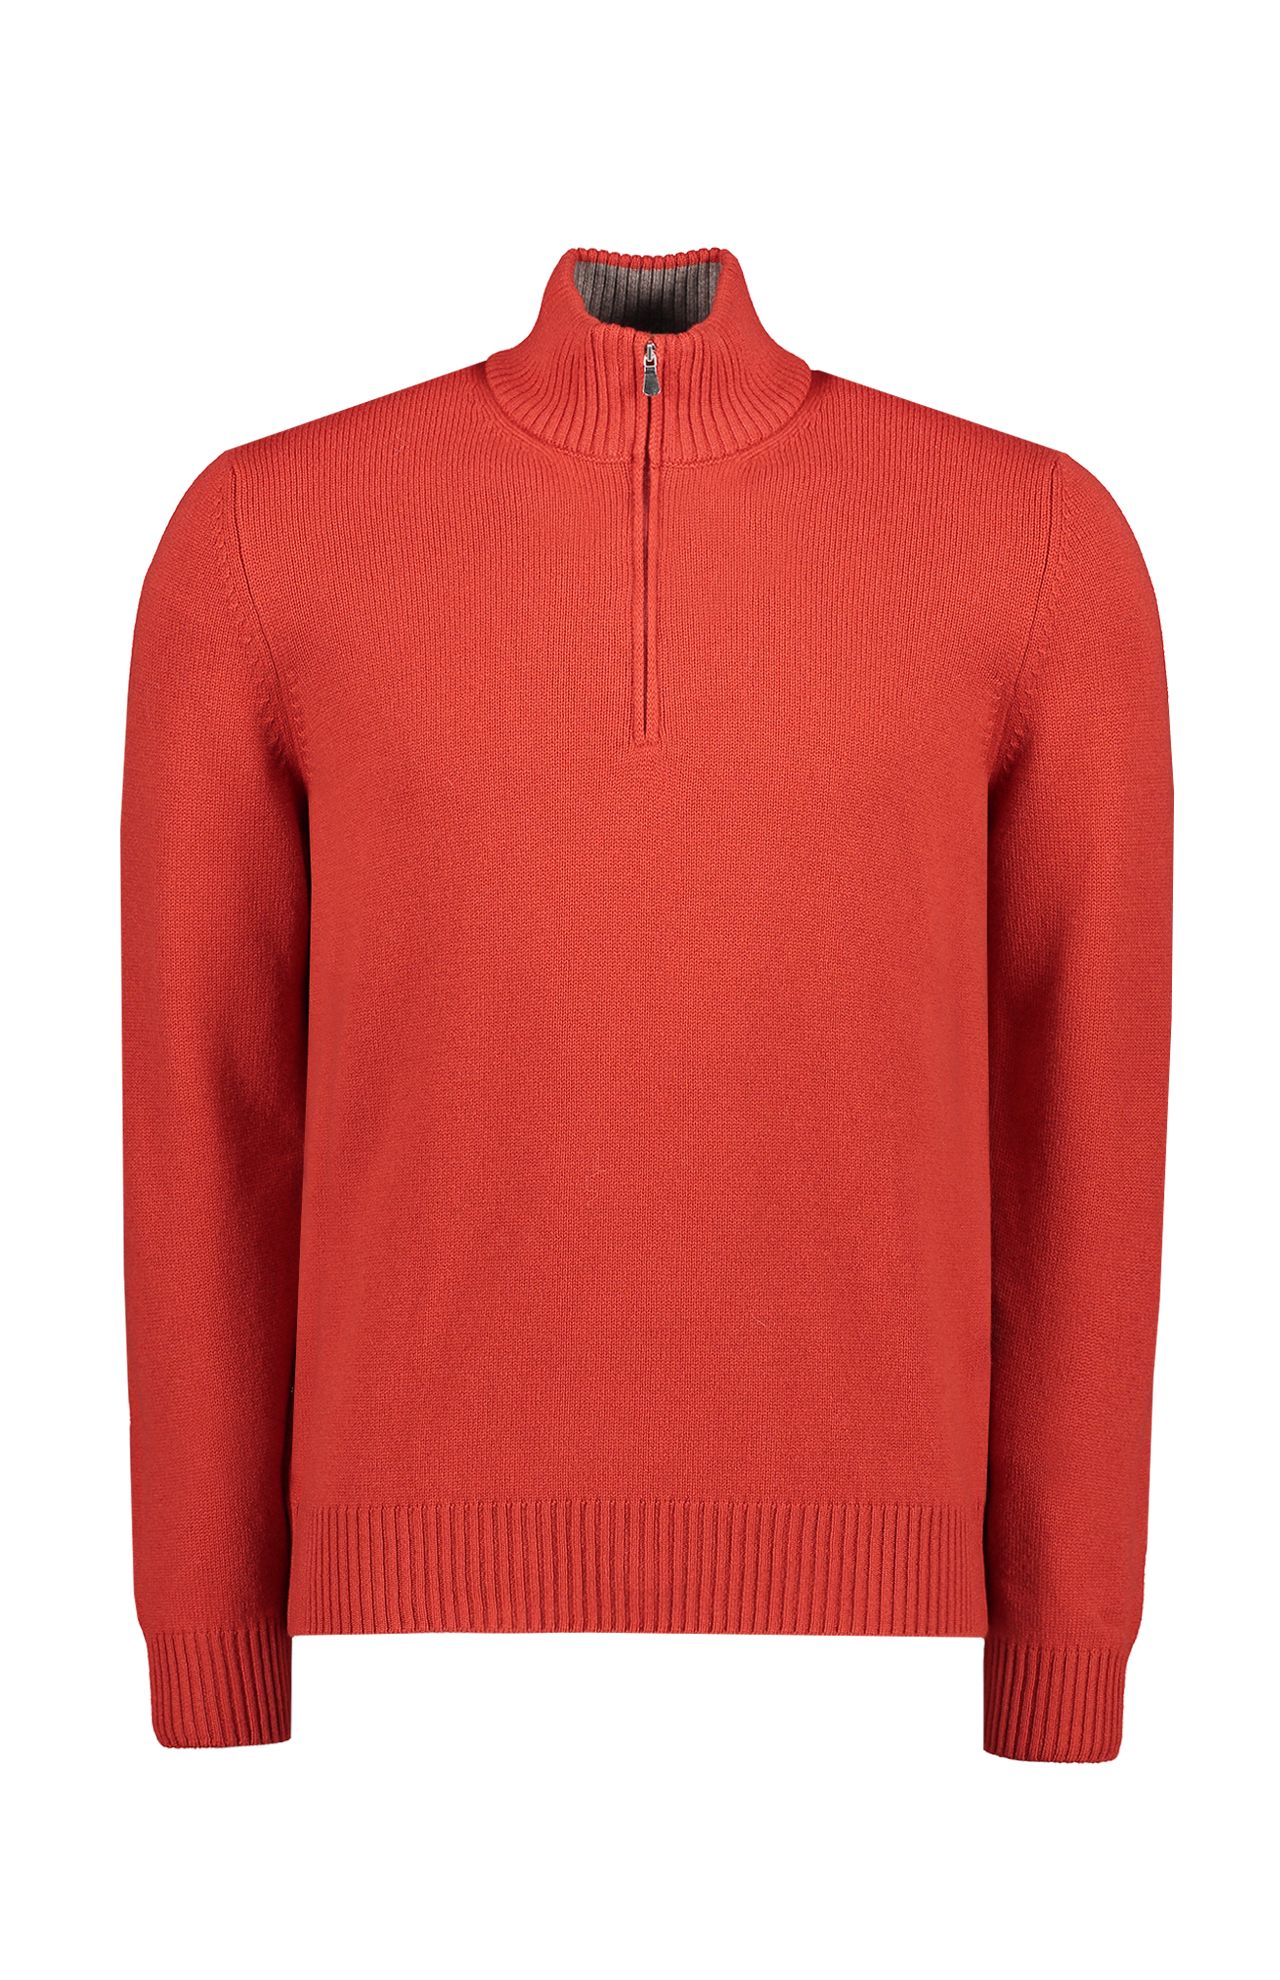 Gran Sasso Wool/Cashmere Quarter Zip Sweater in Orange - Front Mannequin Image  (6897541251187)